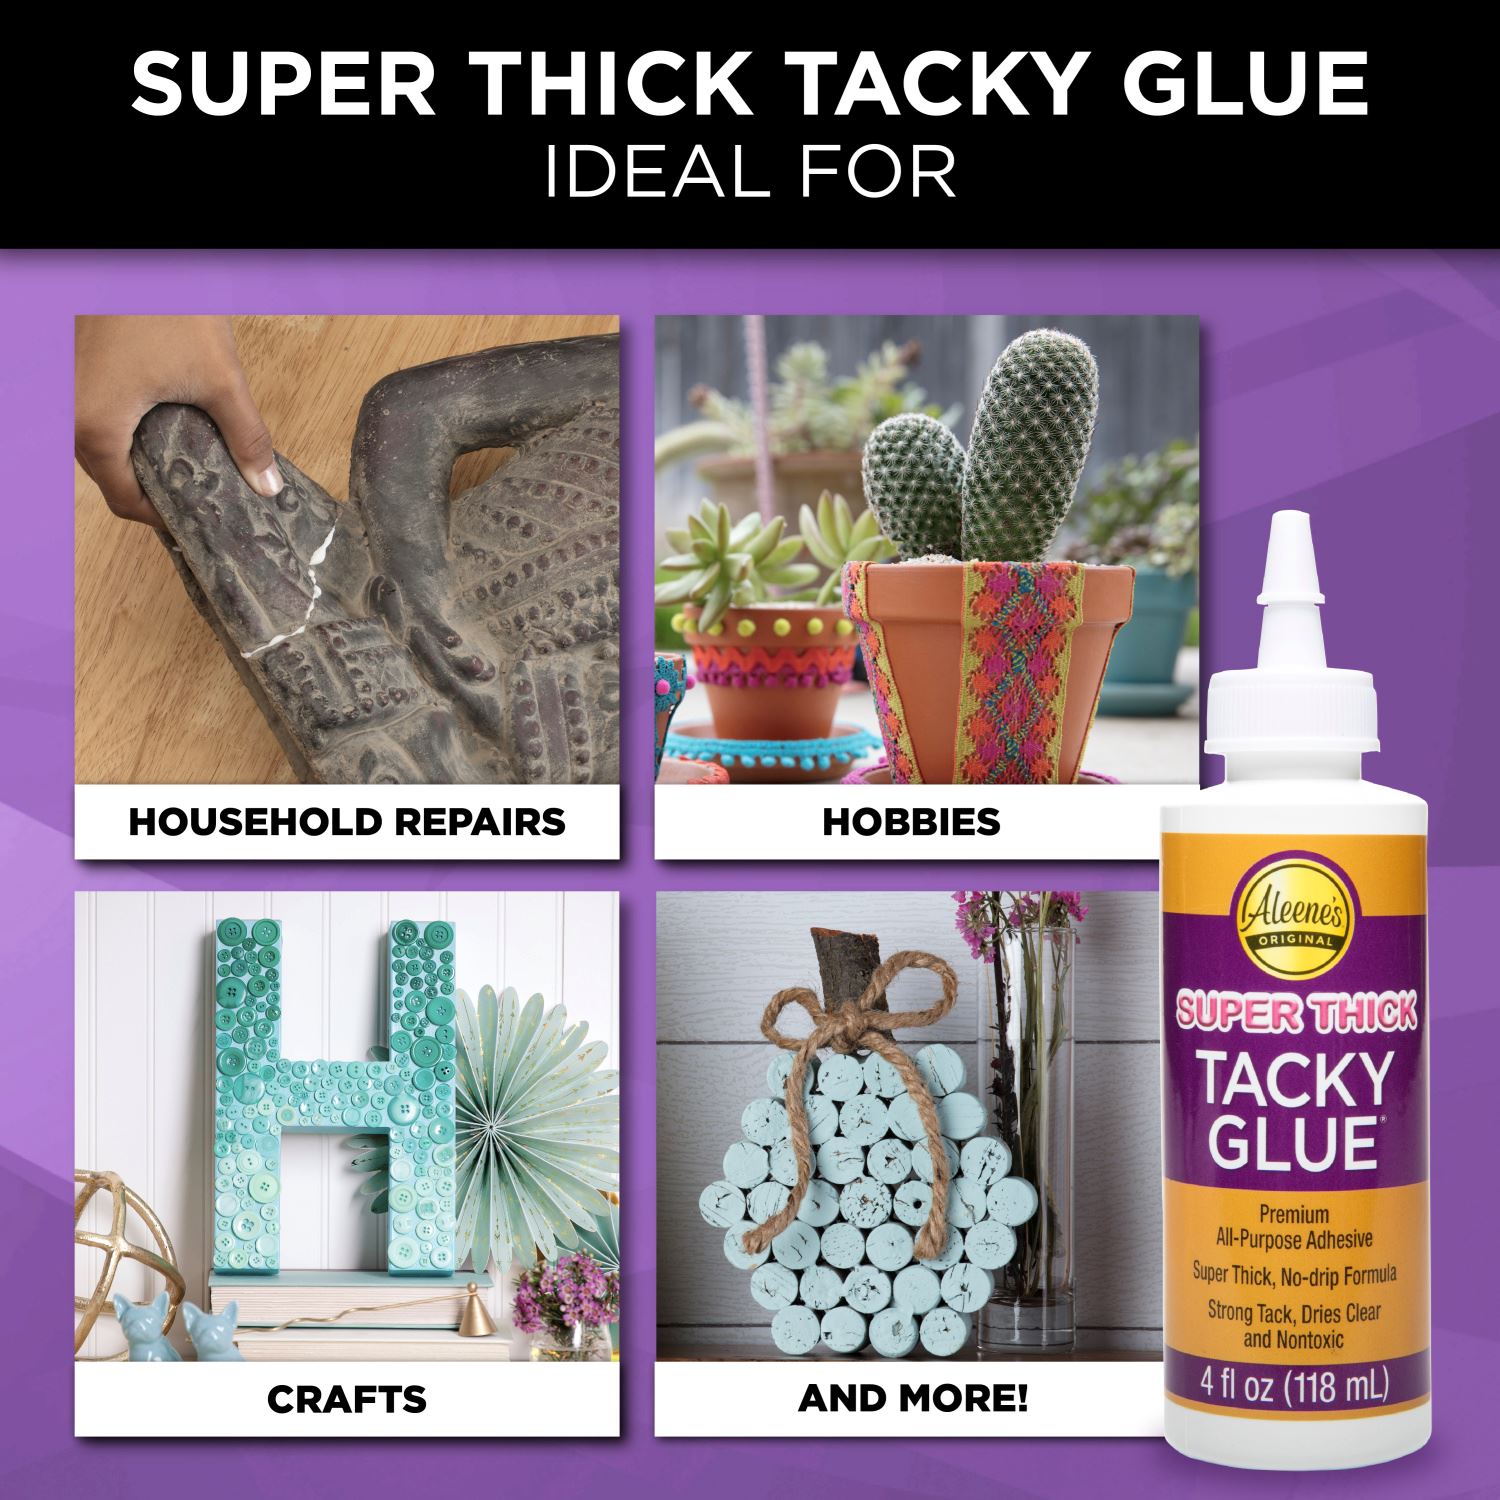 Fast Grab Tacky Glue by Aleene's – Benzie Design